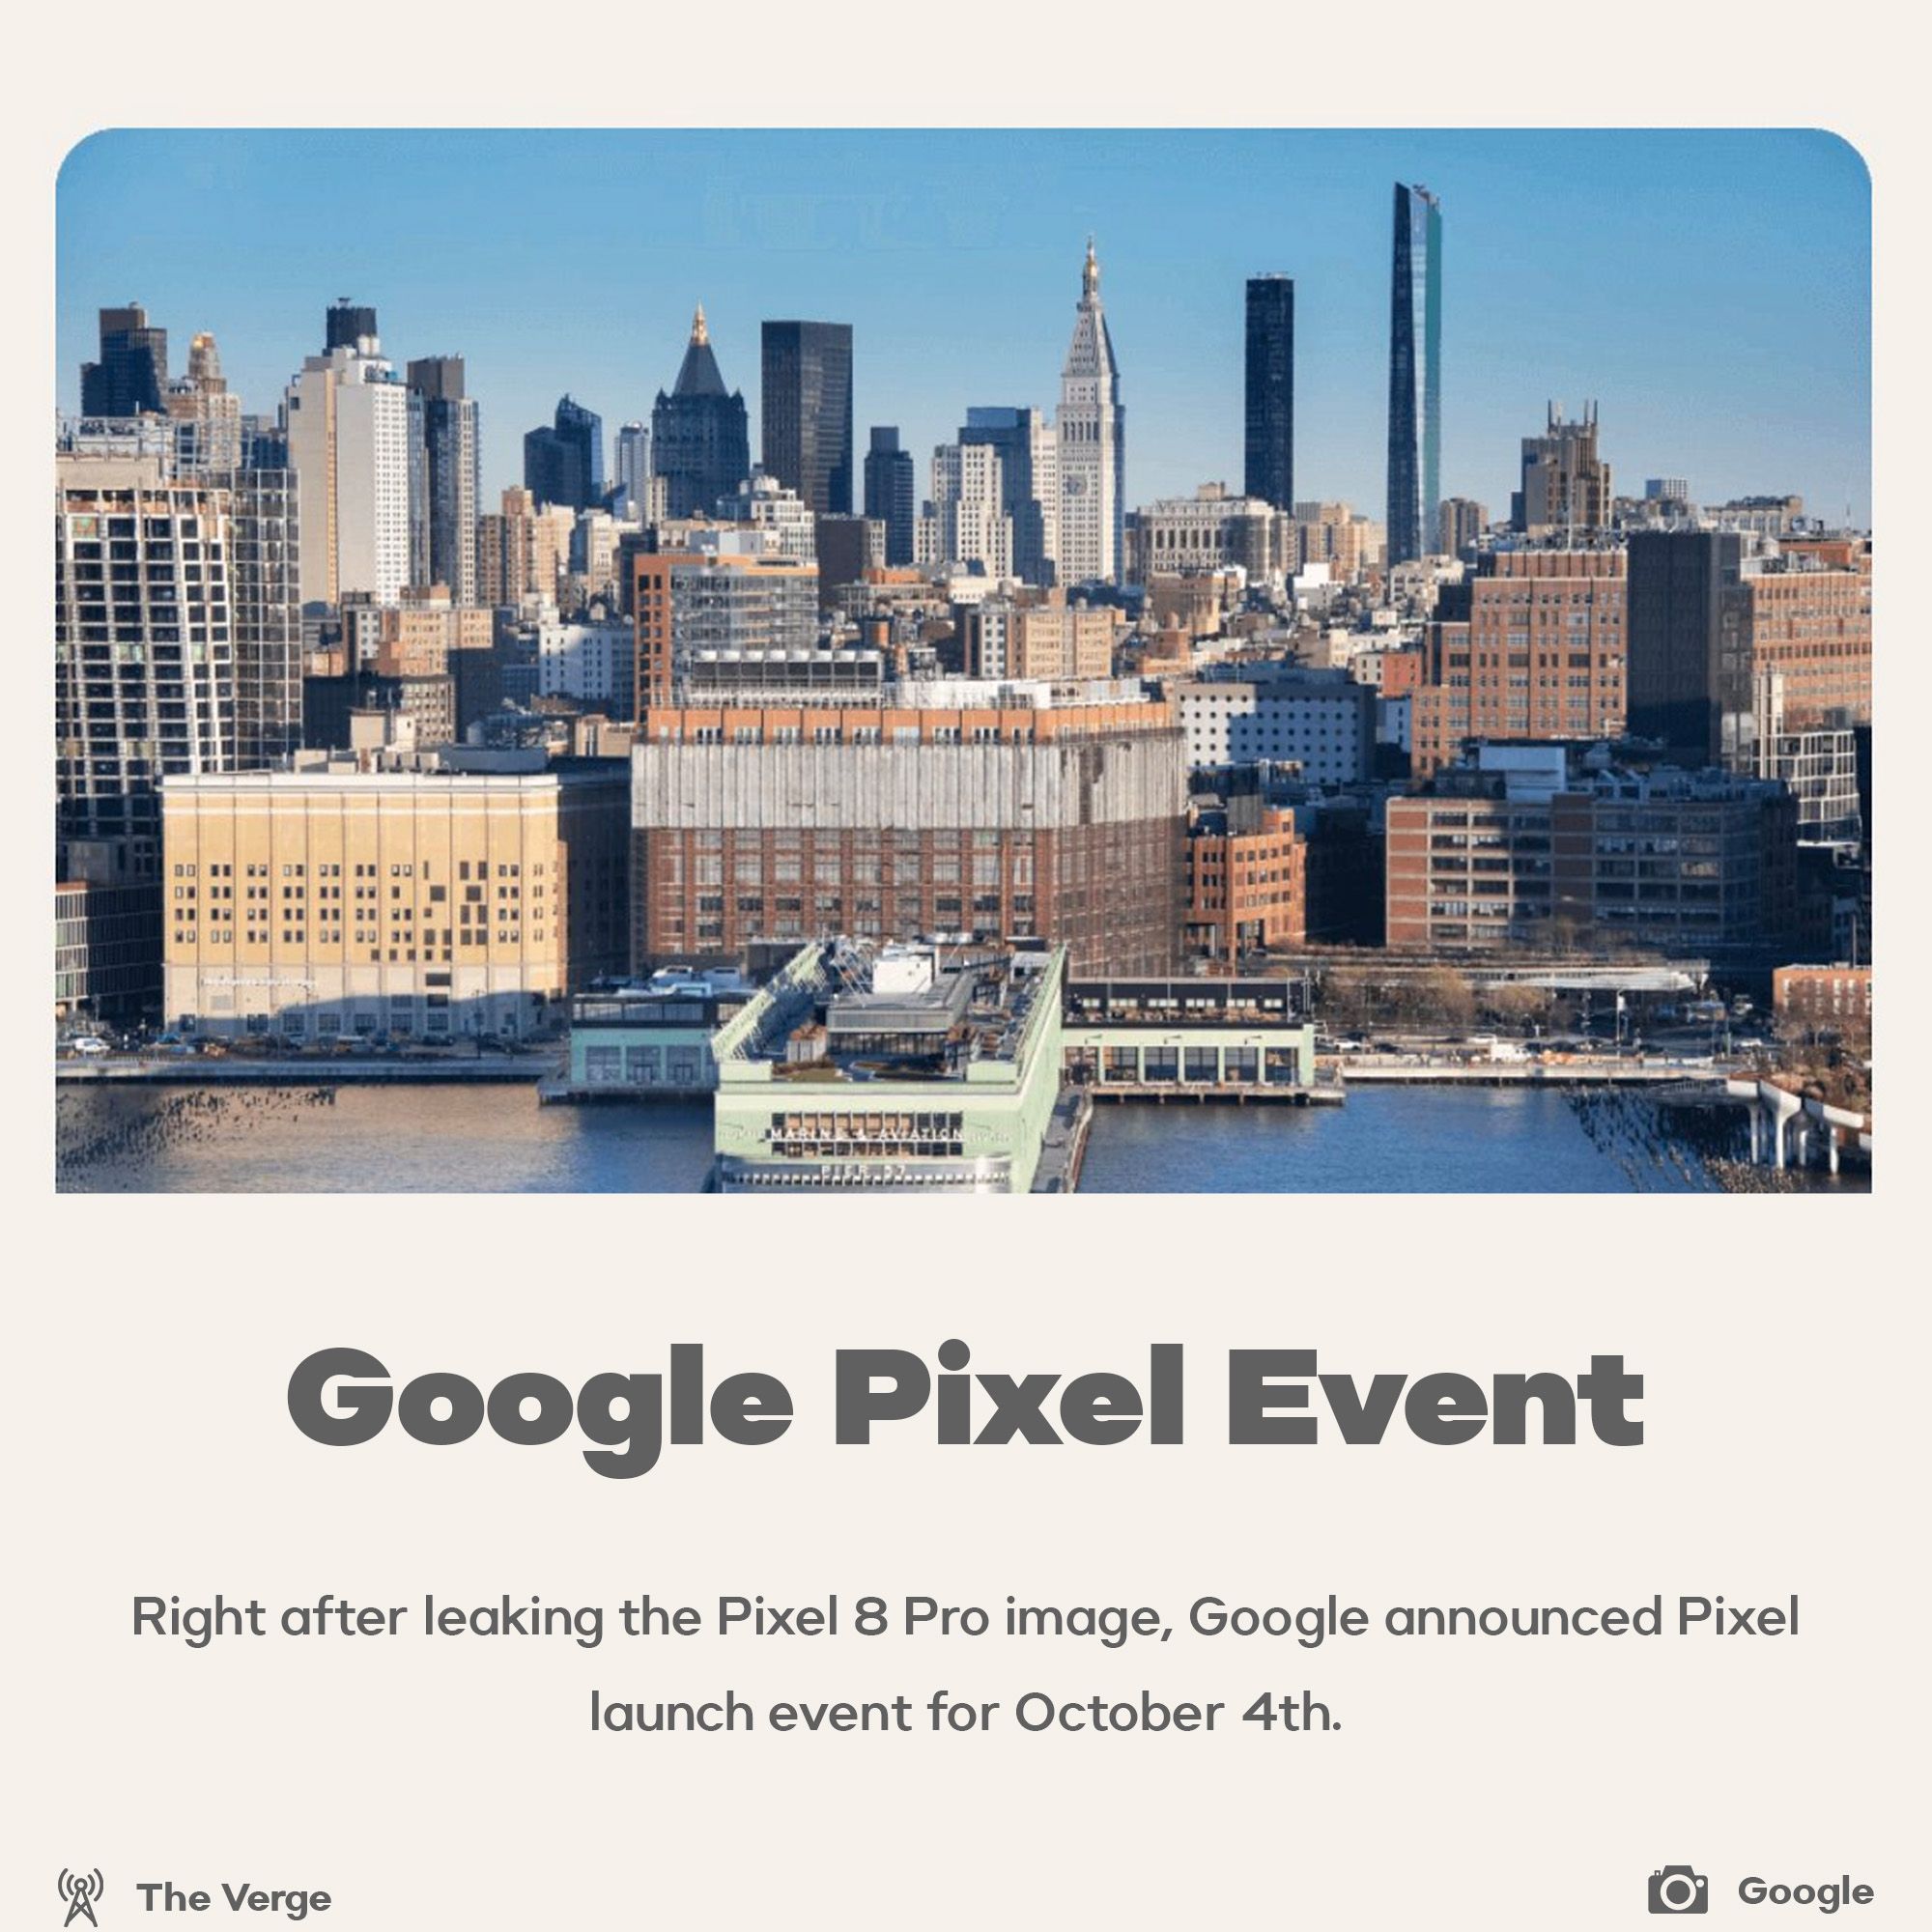 Google Pixel Event announced